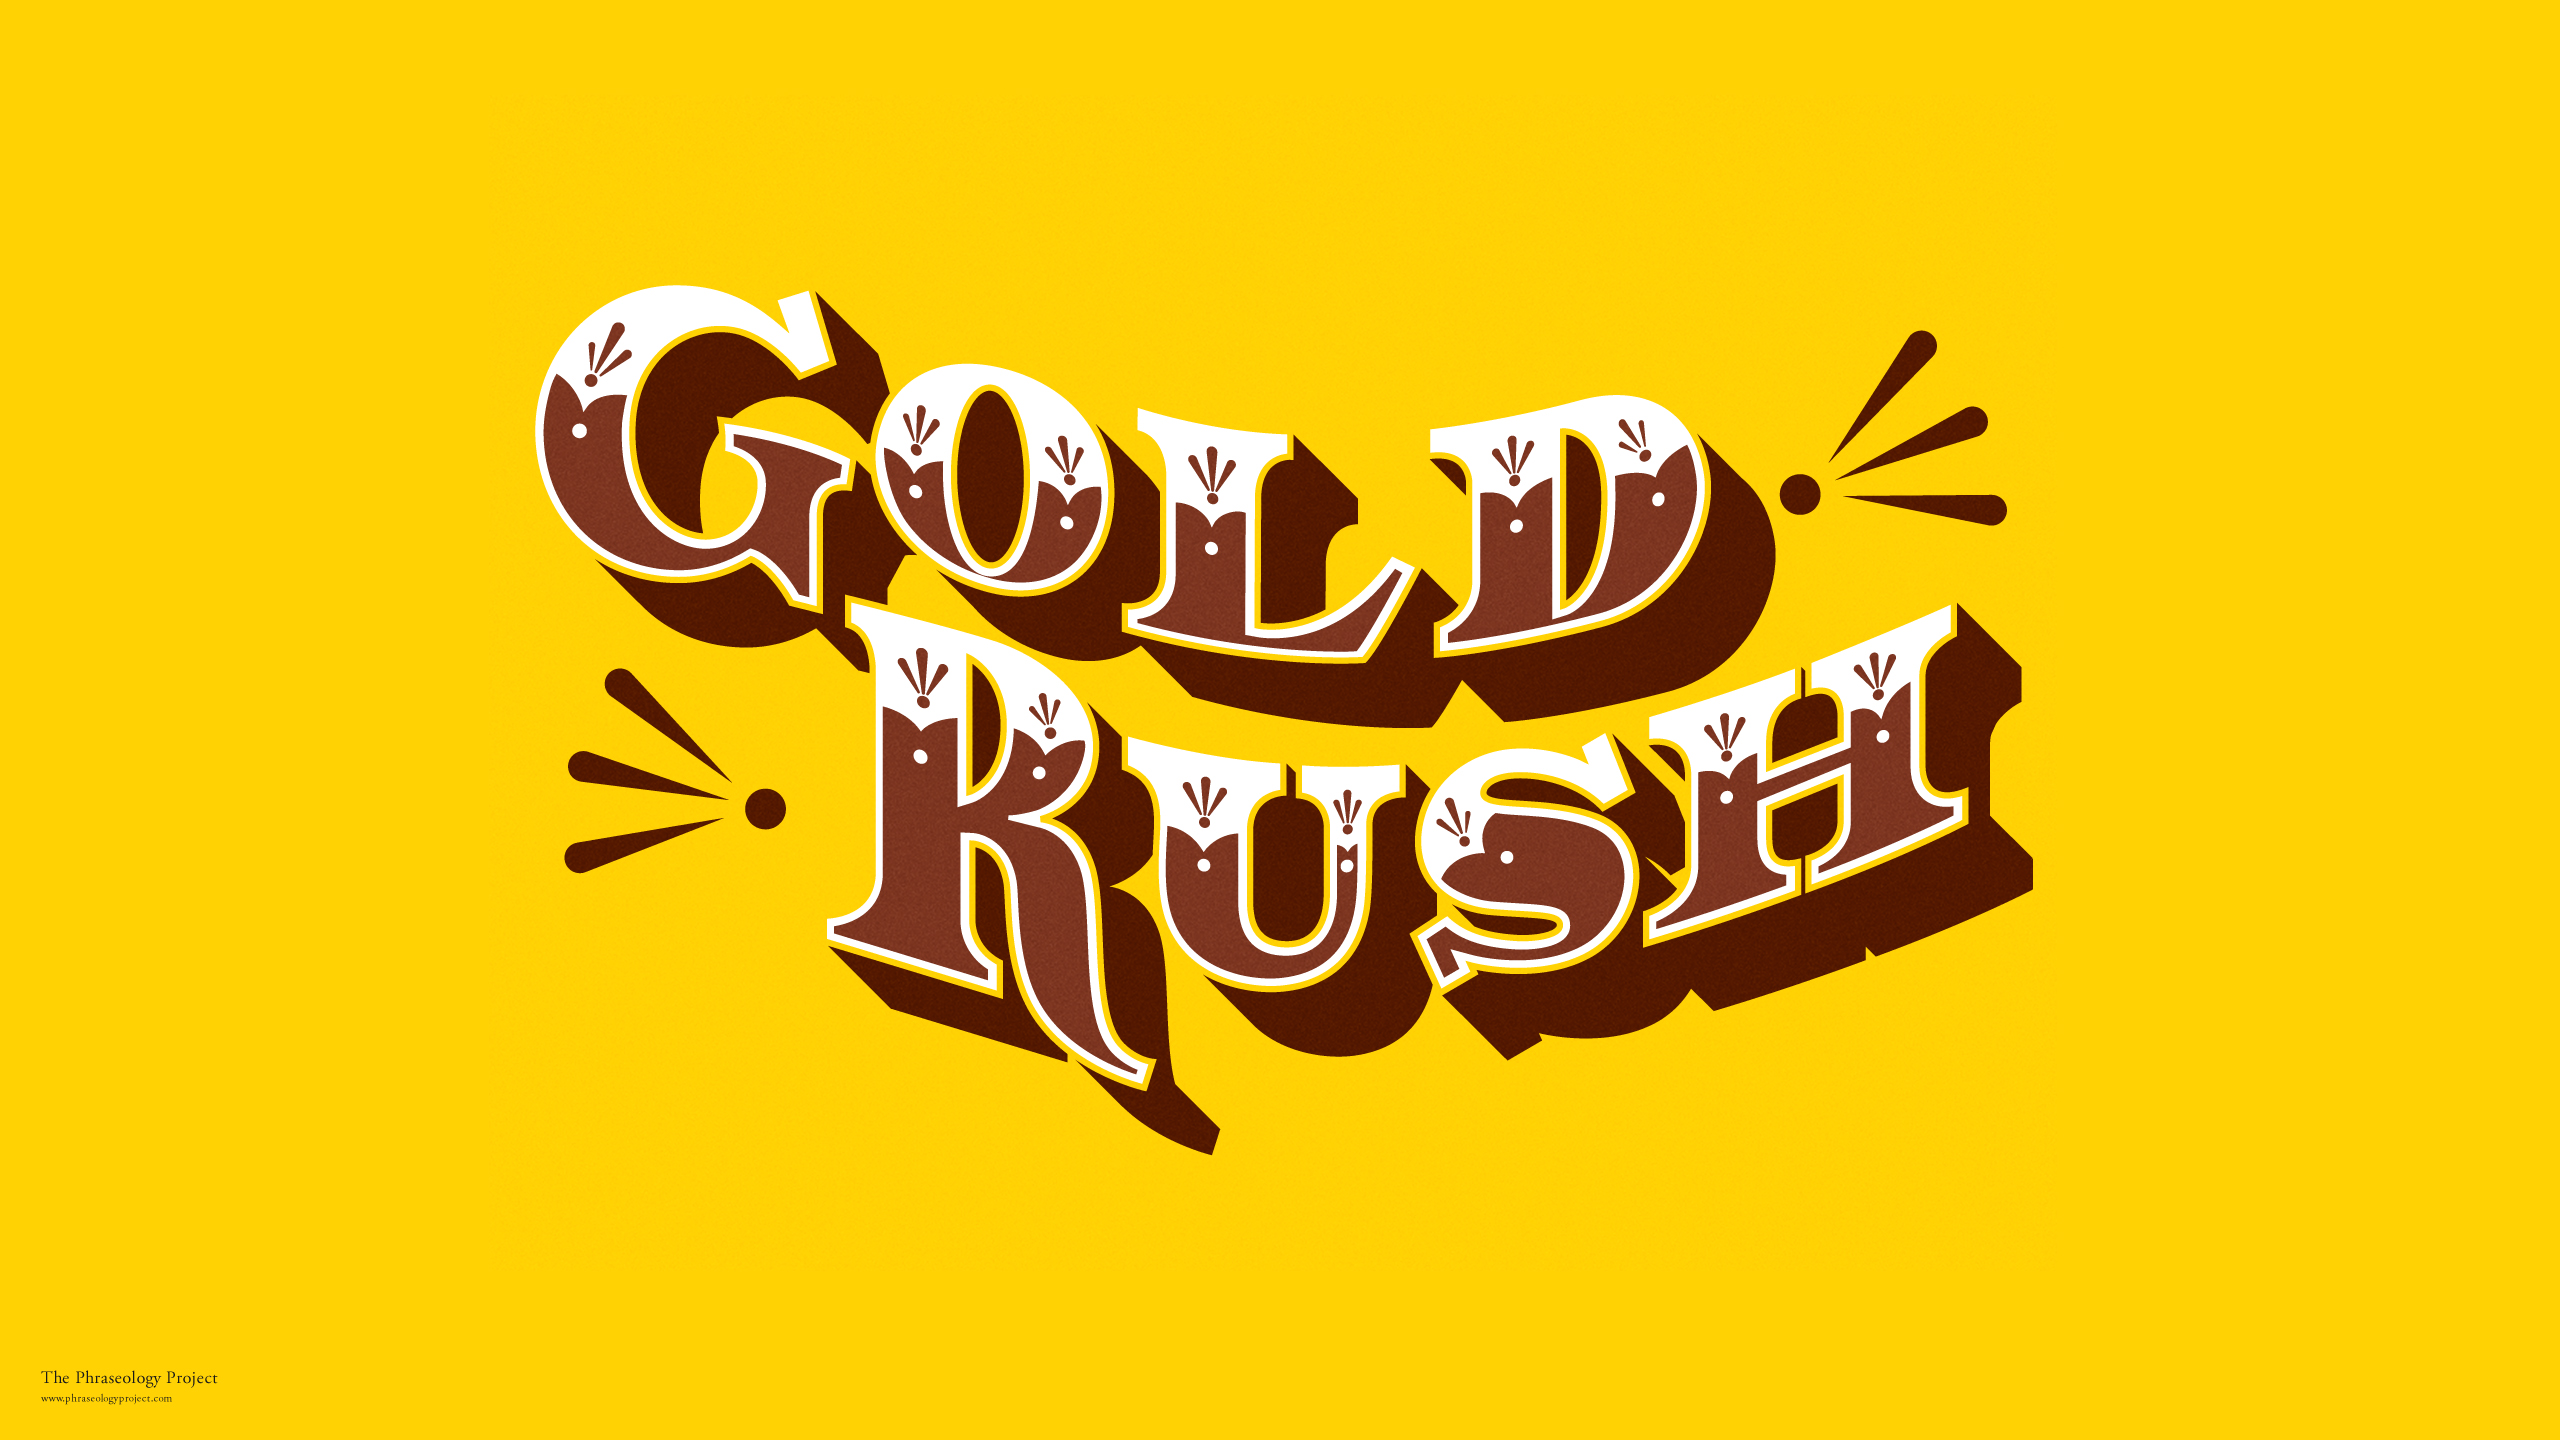 Order-Aheadu201d Gold Rush .